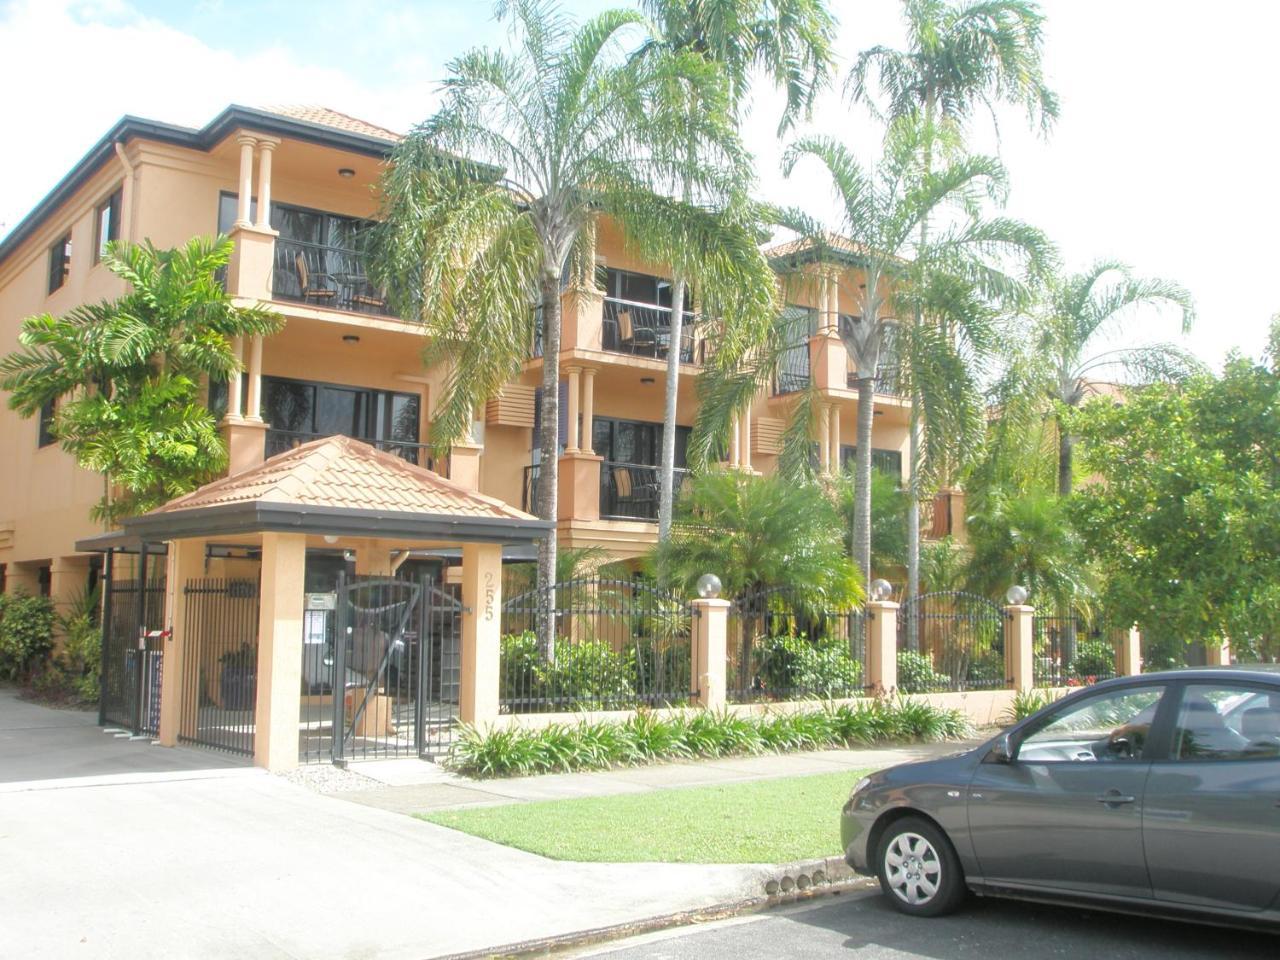 Central Plaza Apartments Cairns Exterior foto